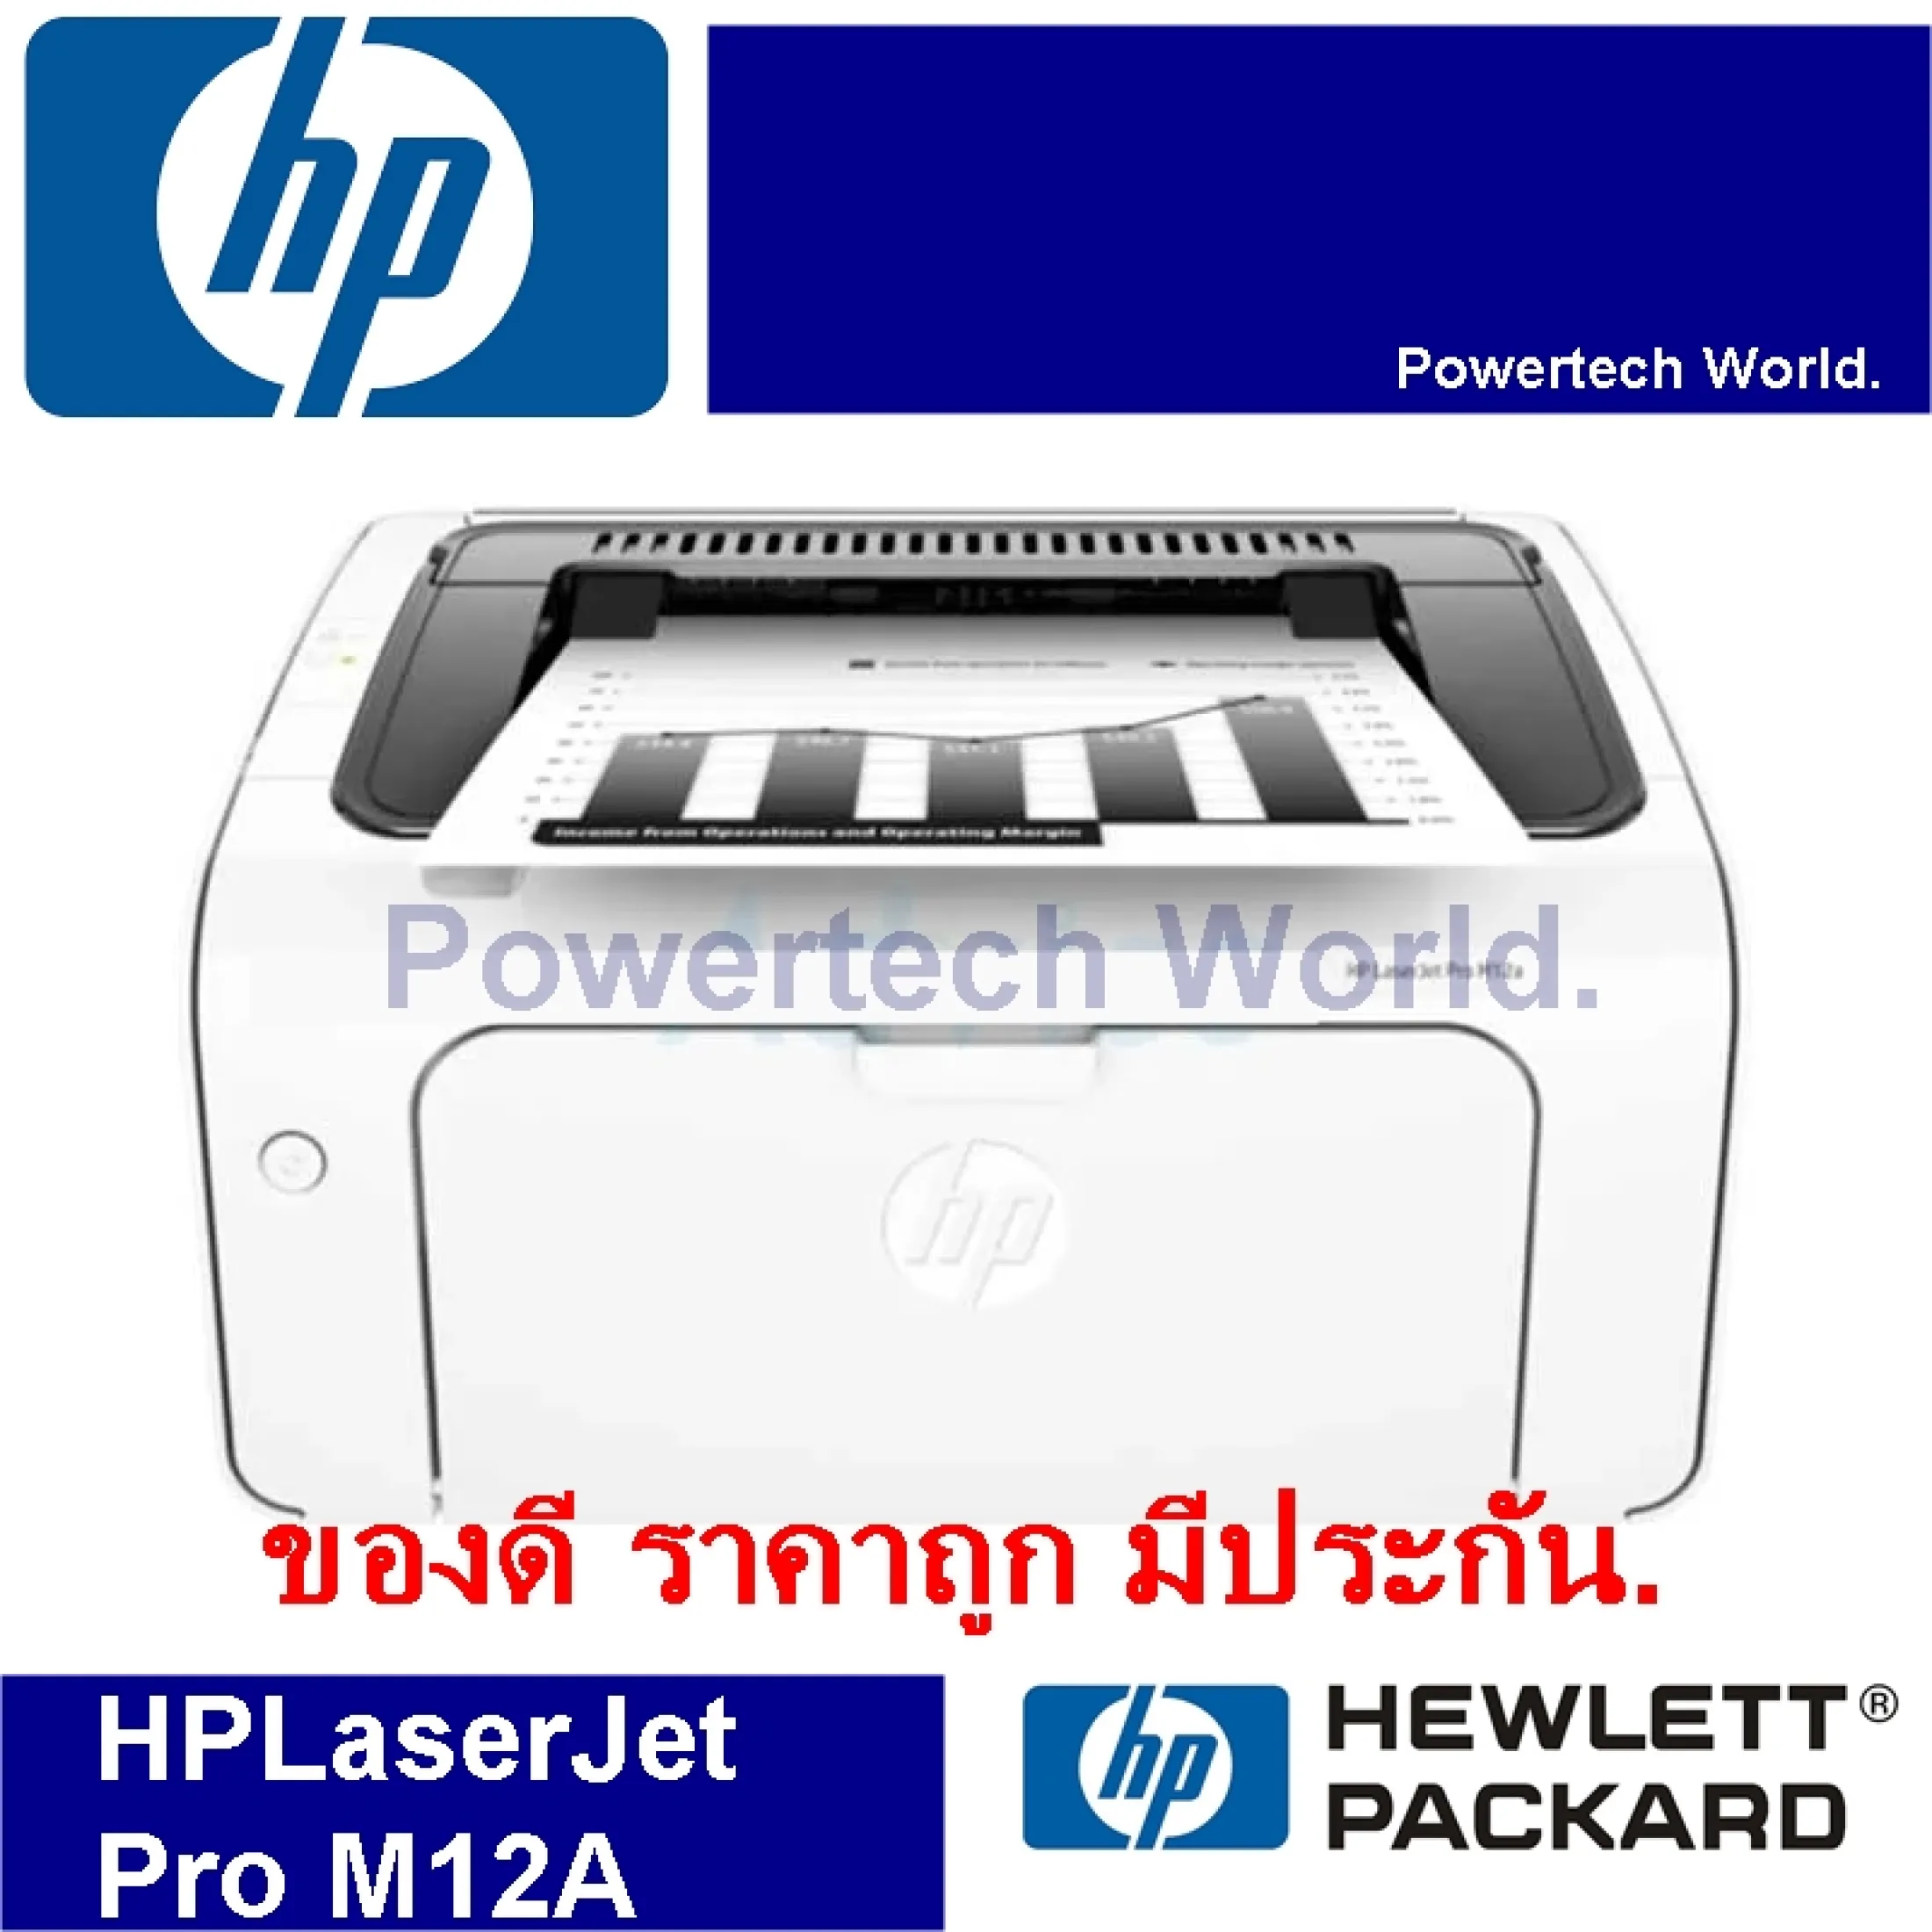 Hp Laser Jet Pro M12a Windows 10 Pro Hp Laserjet Pro M12a T0l45a Mono Printer Lazada Hp Laserjet Pro M12a Printer Wicksect